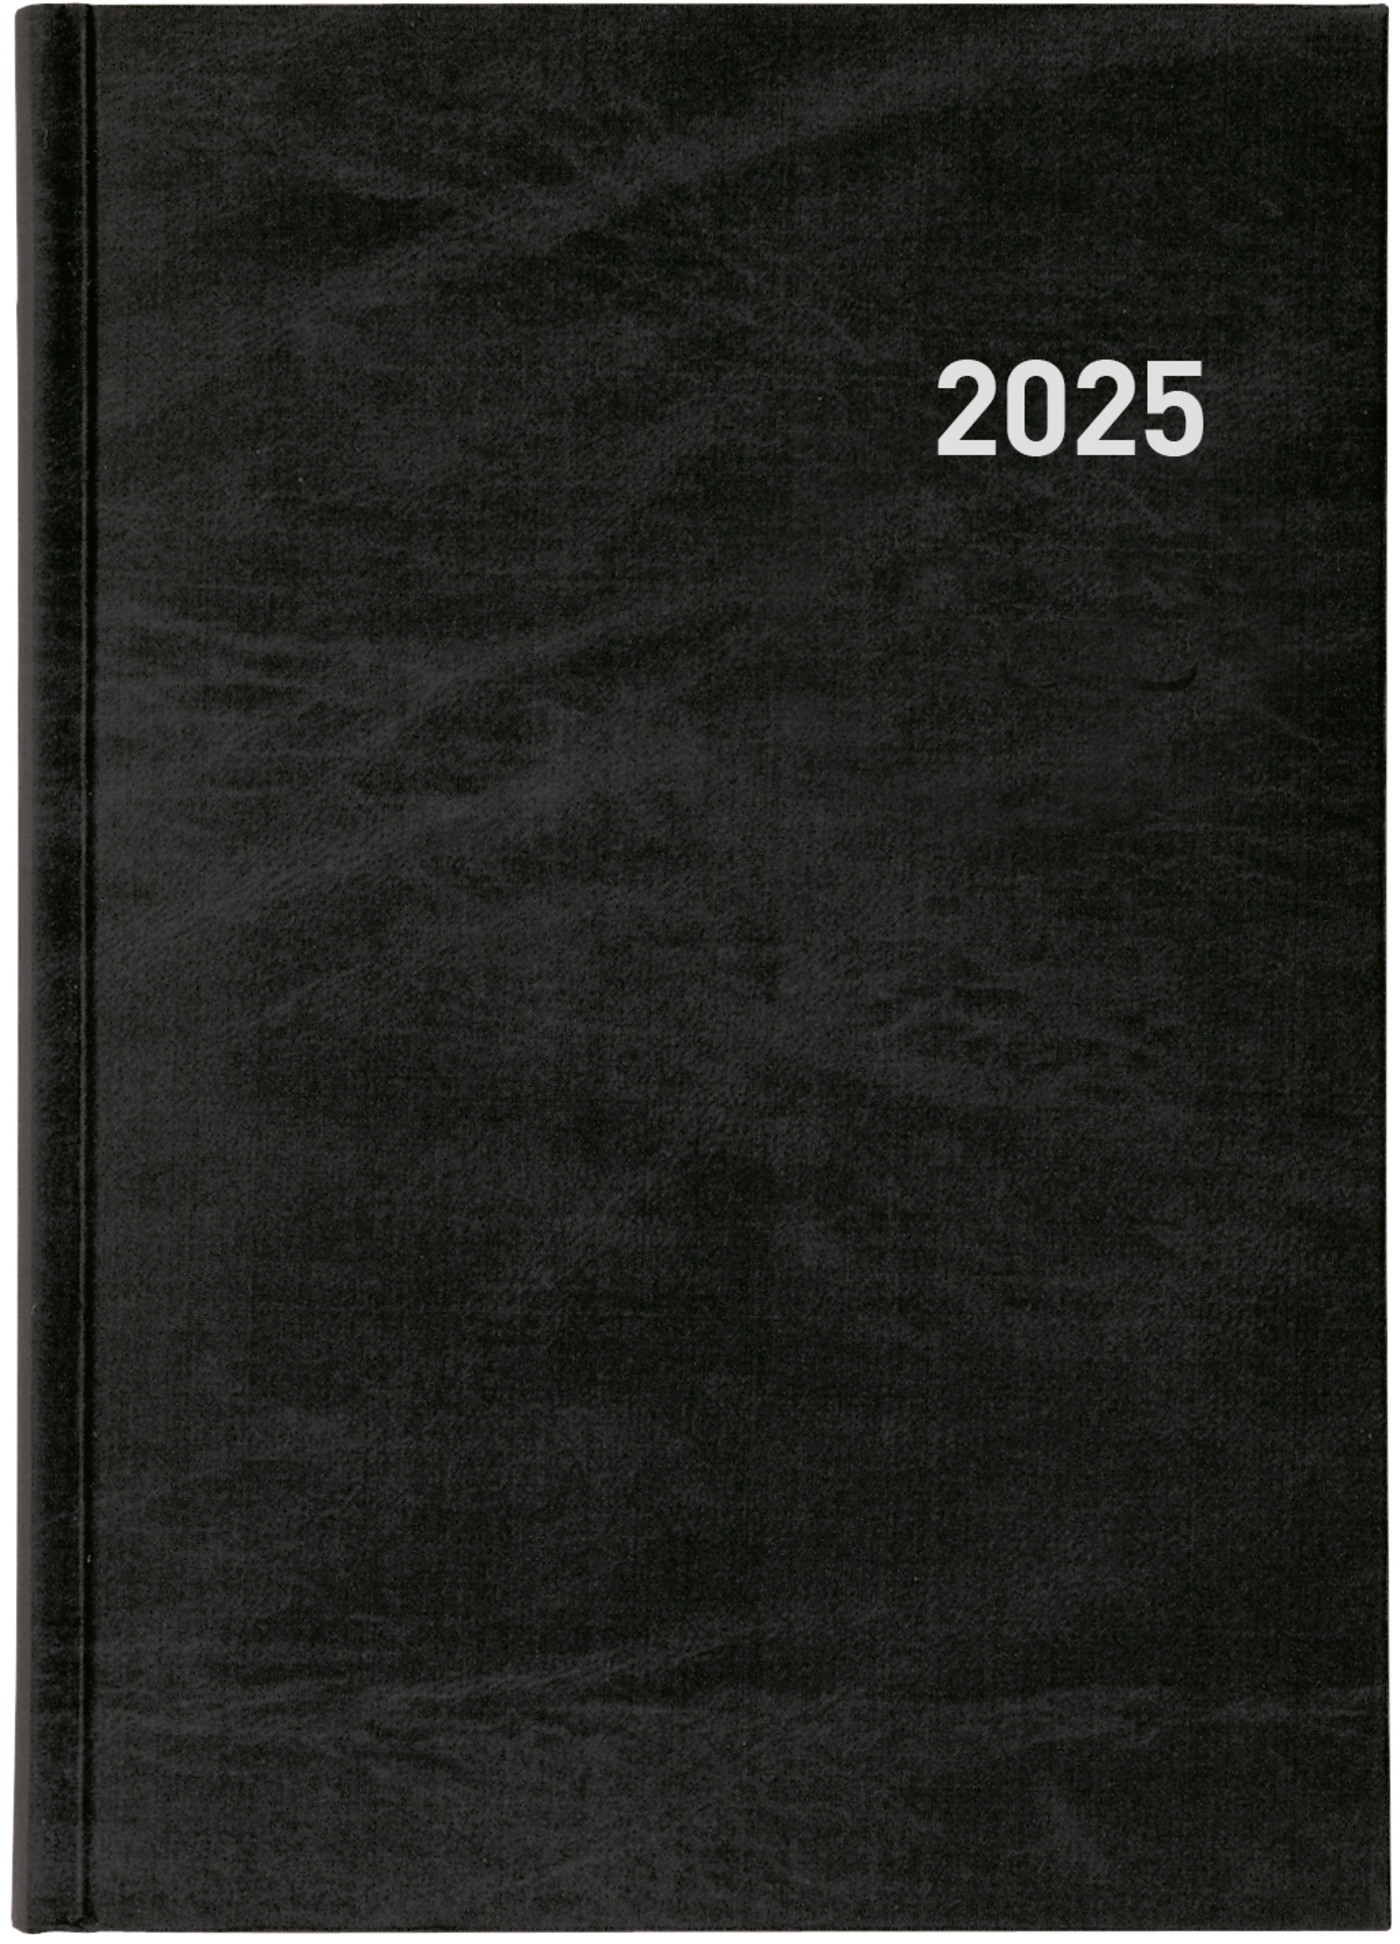 BIELLA Agenda Registra 2025 809501020025 1J/2P noir ML 14.5x20.5cm